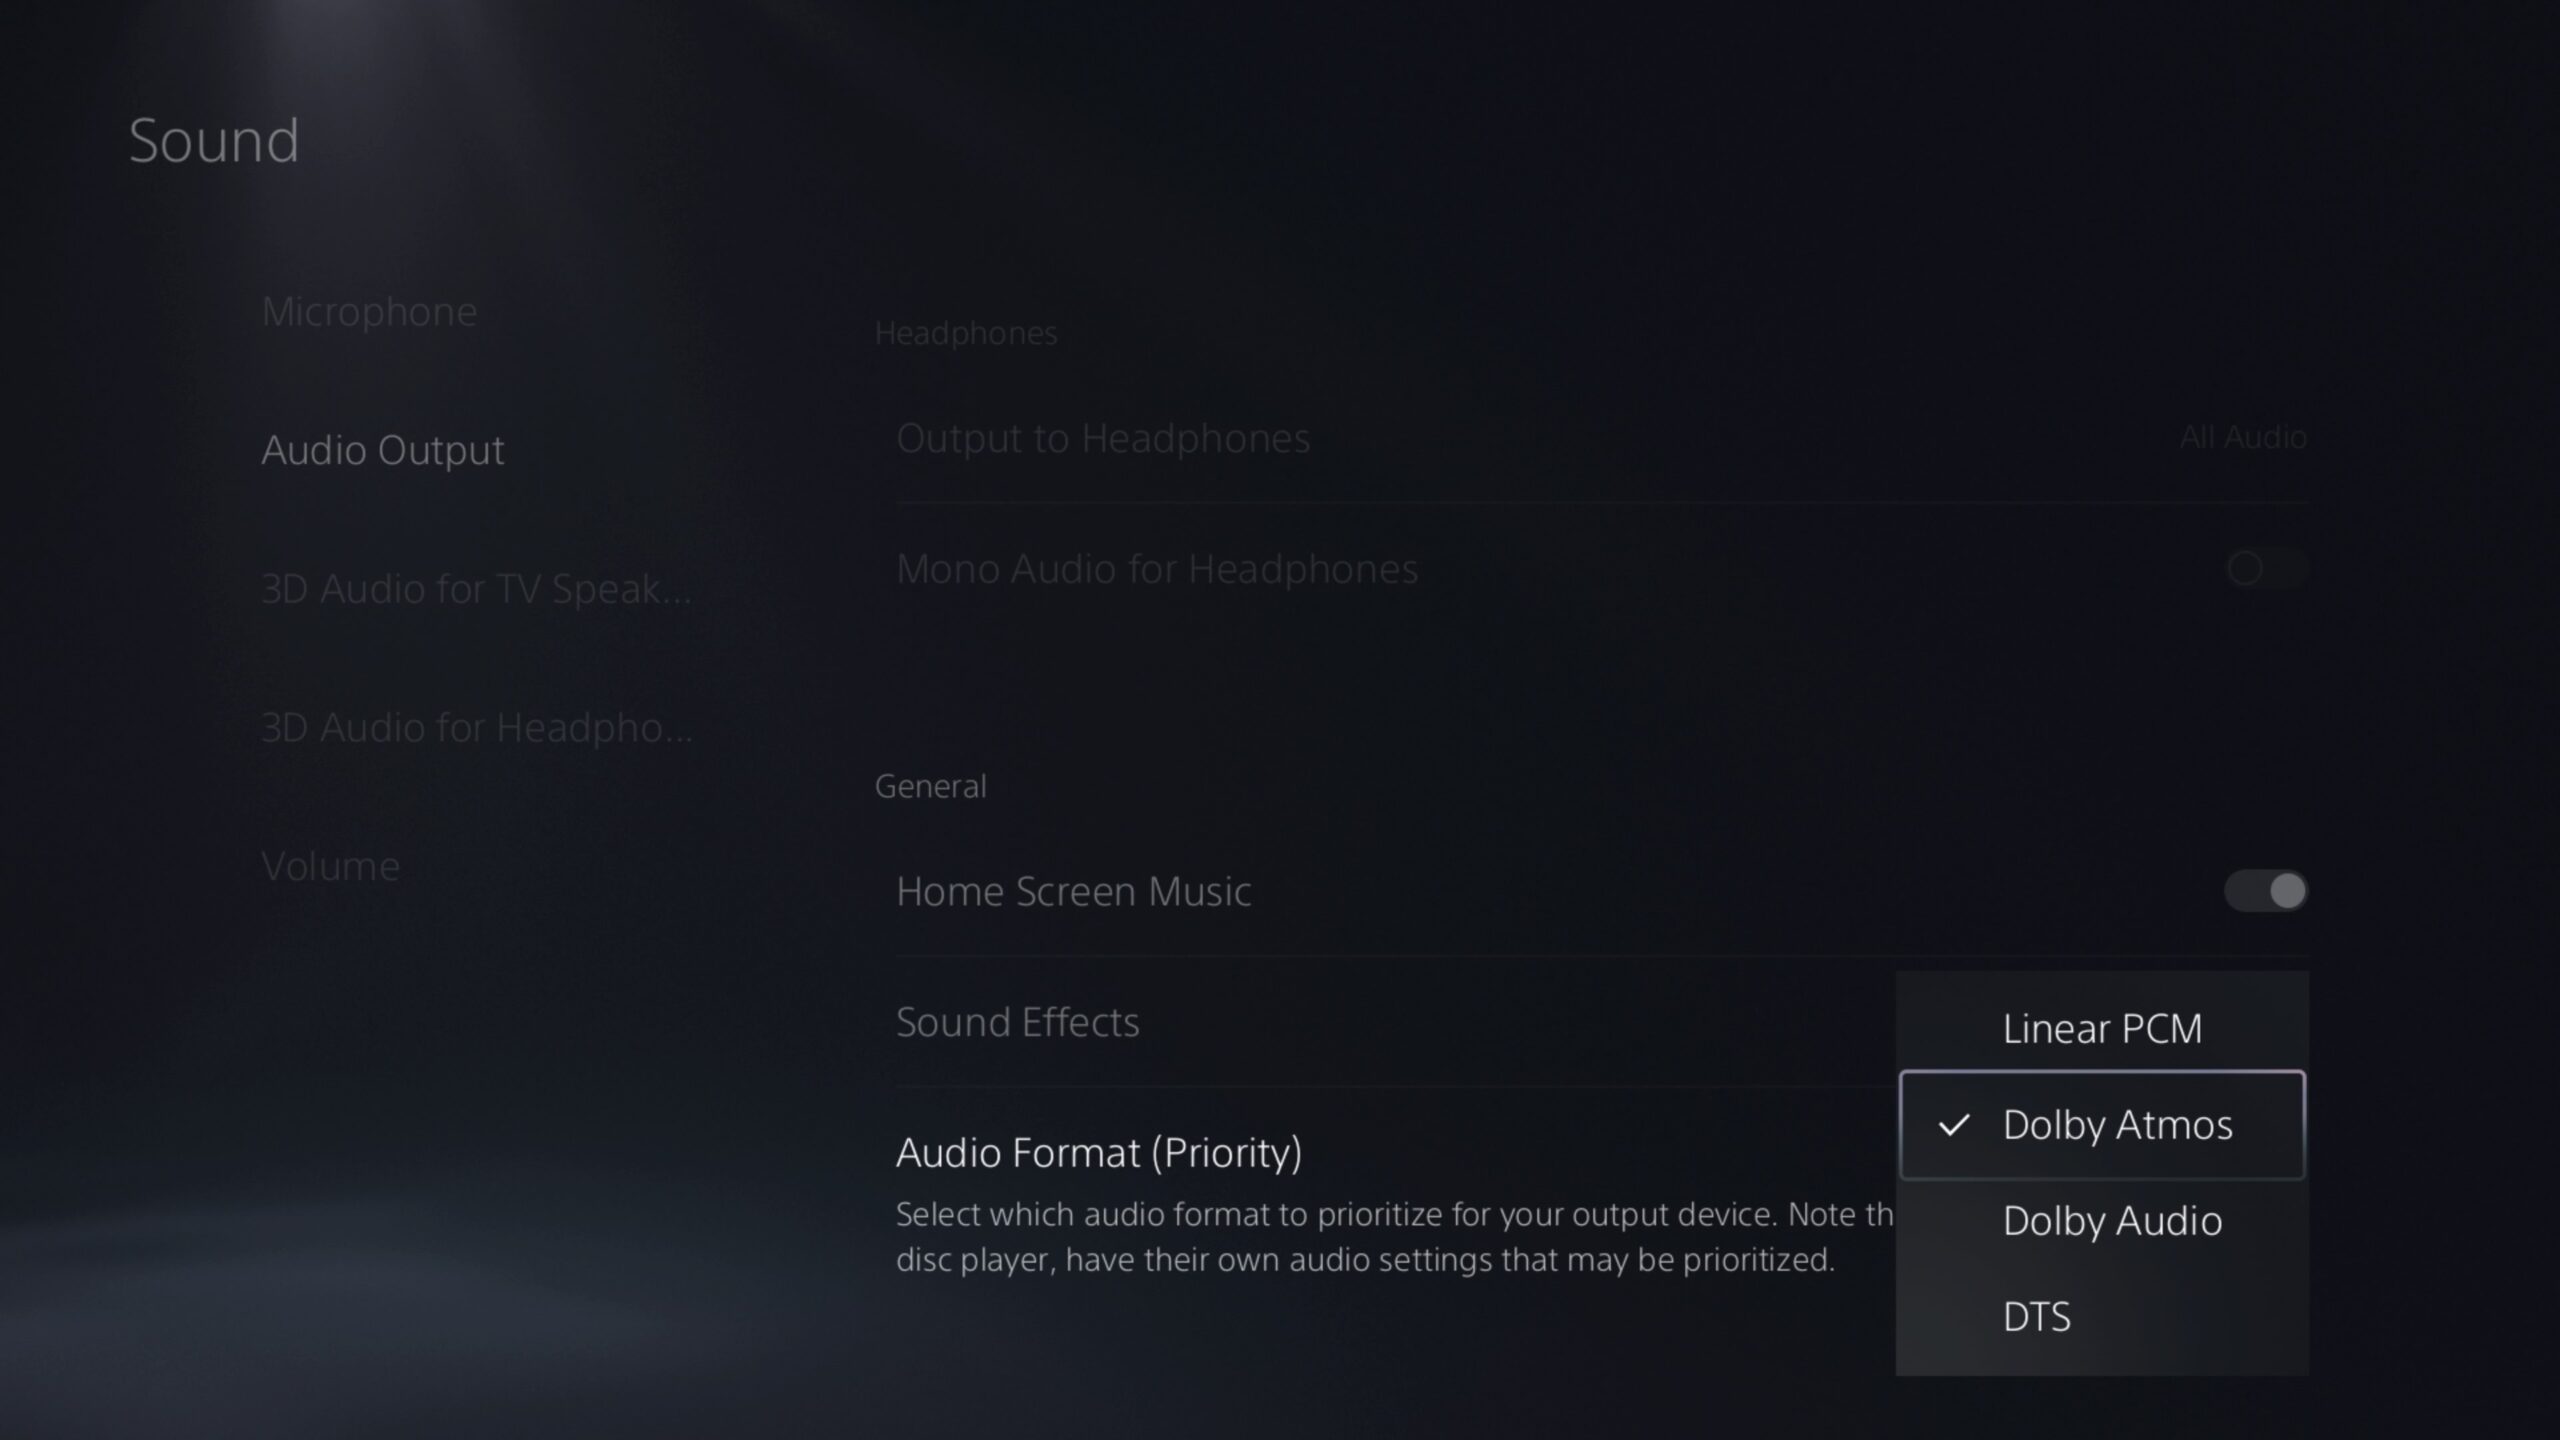 PS5 UI screenshot showing audio output options